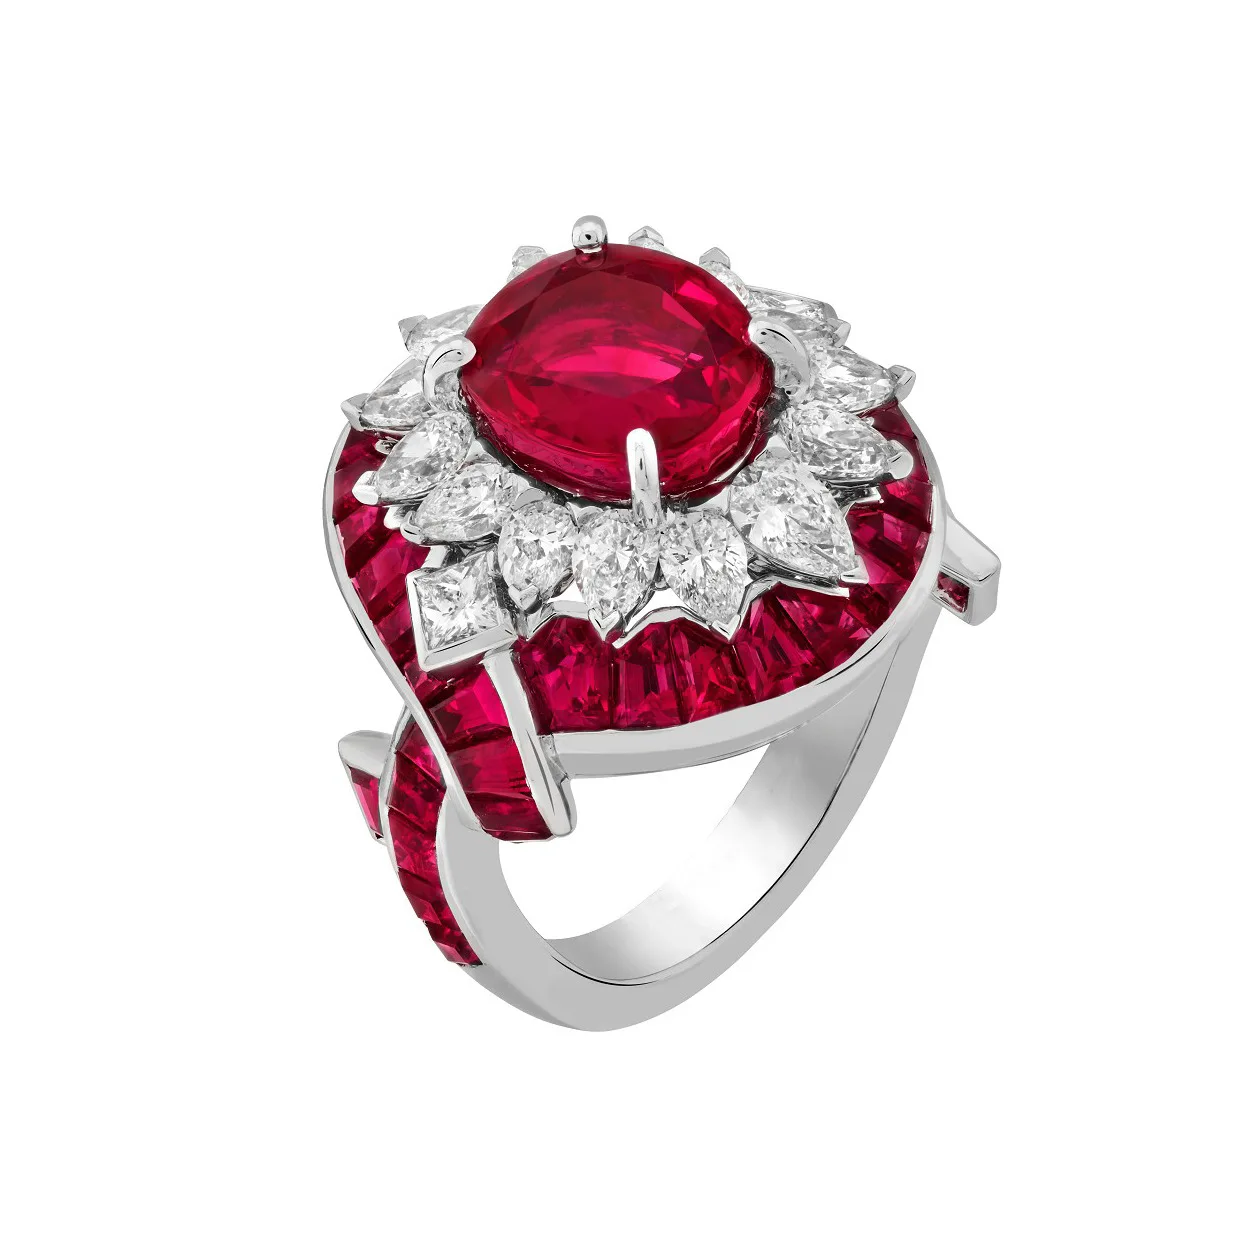 

ZOCA Original 925 Sterling Silver Ruby Gemstone Ring For Women Vintage Sparkling Birthstone Round Big Stone Jewelry